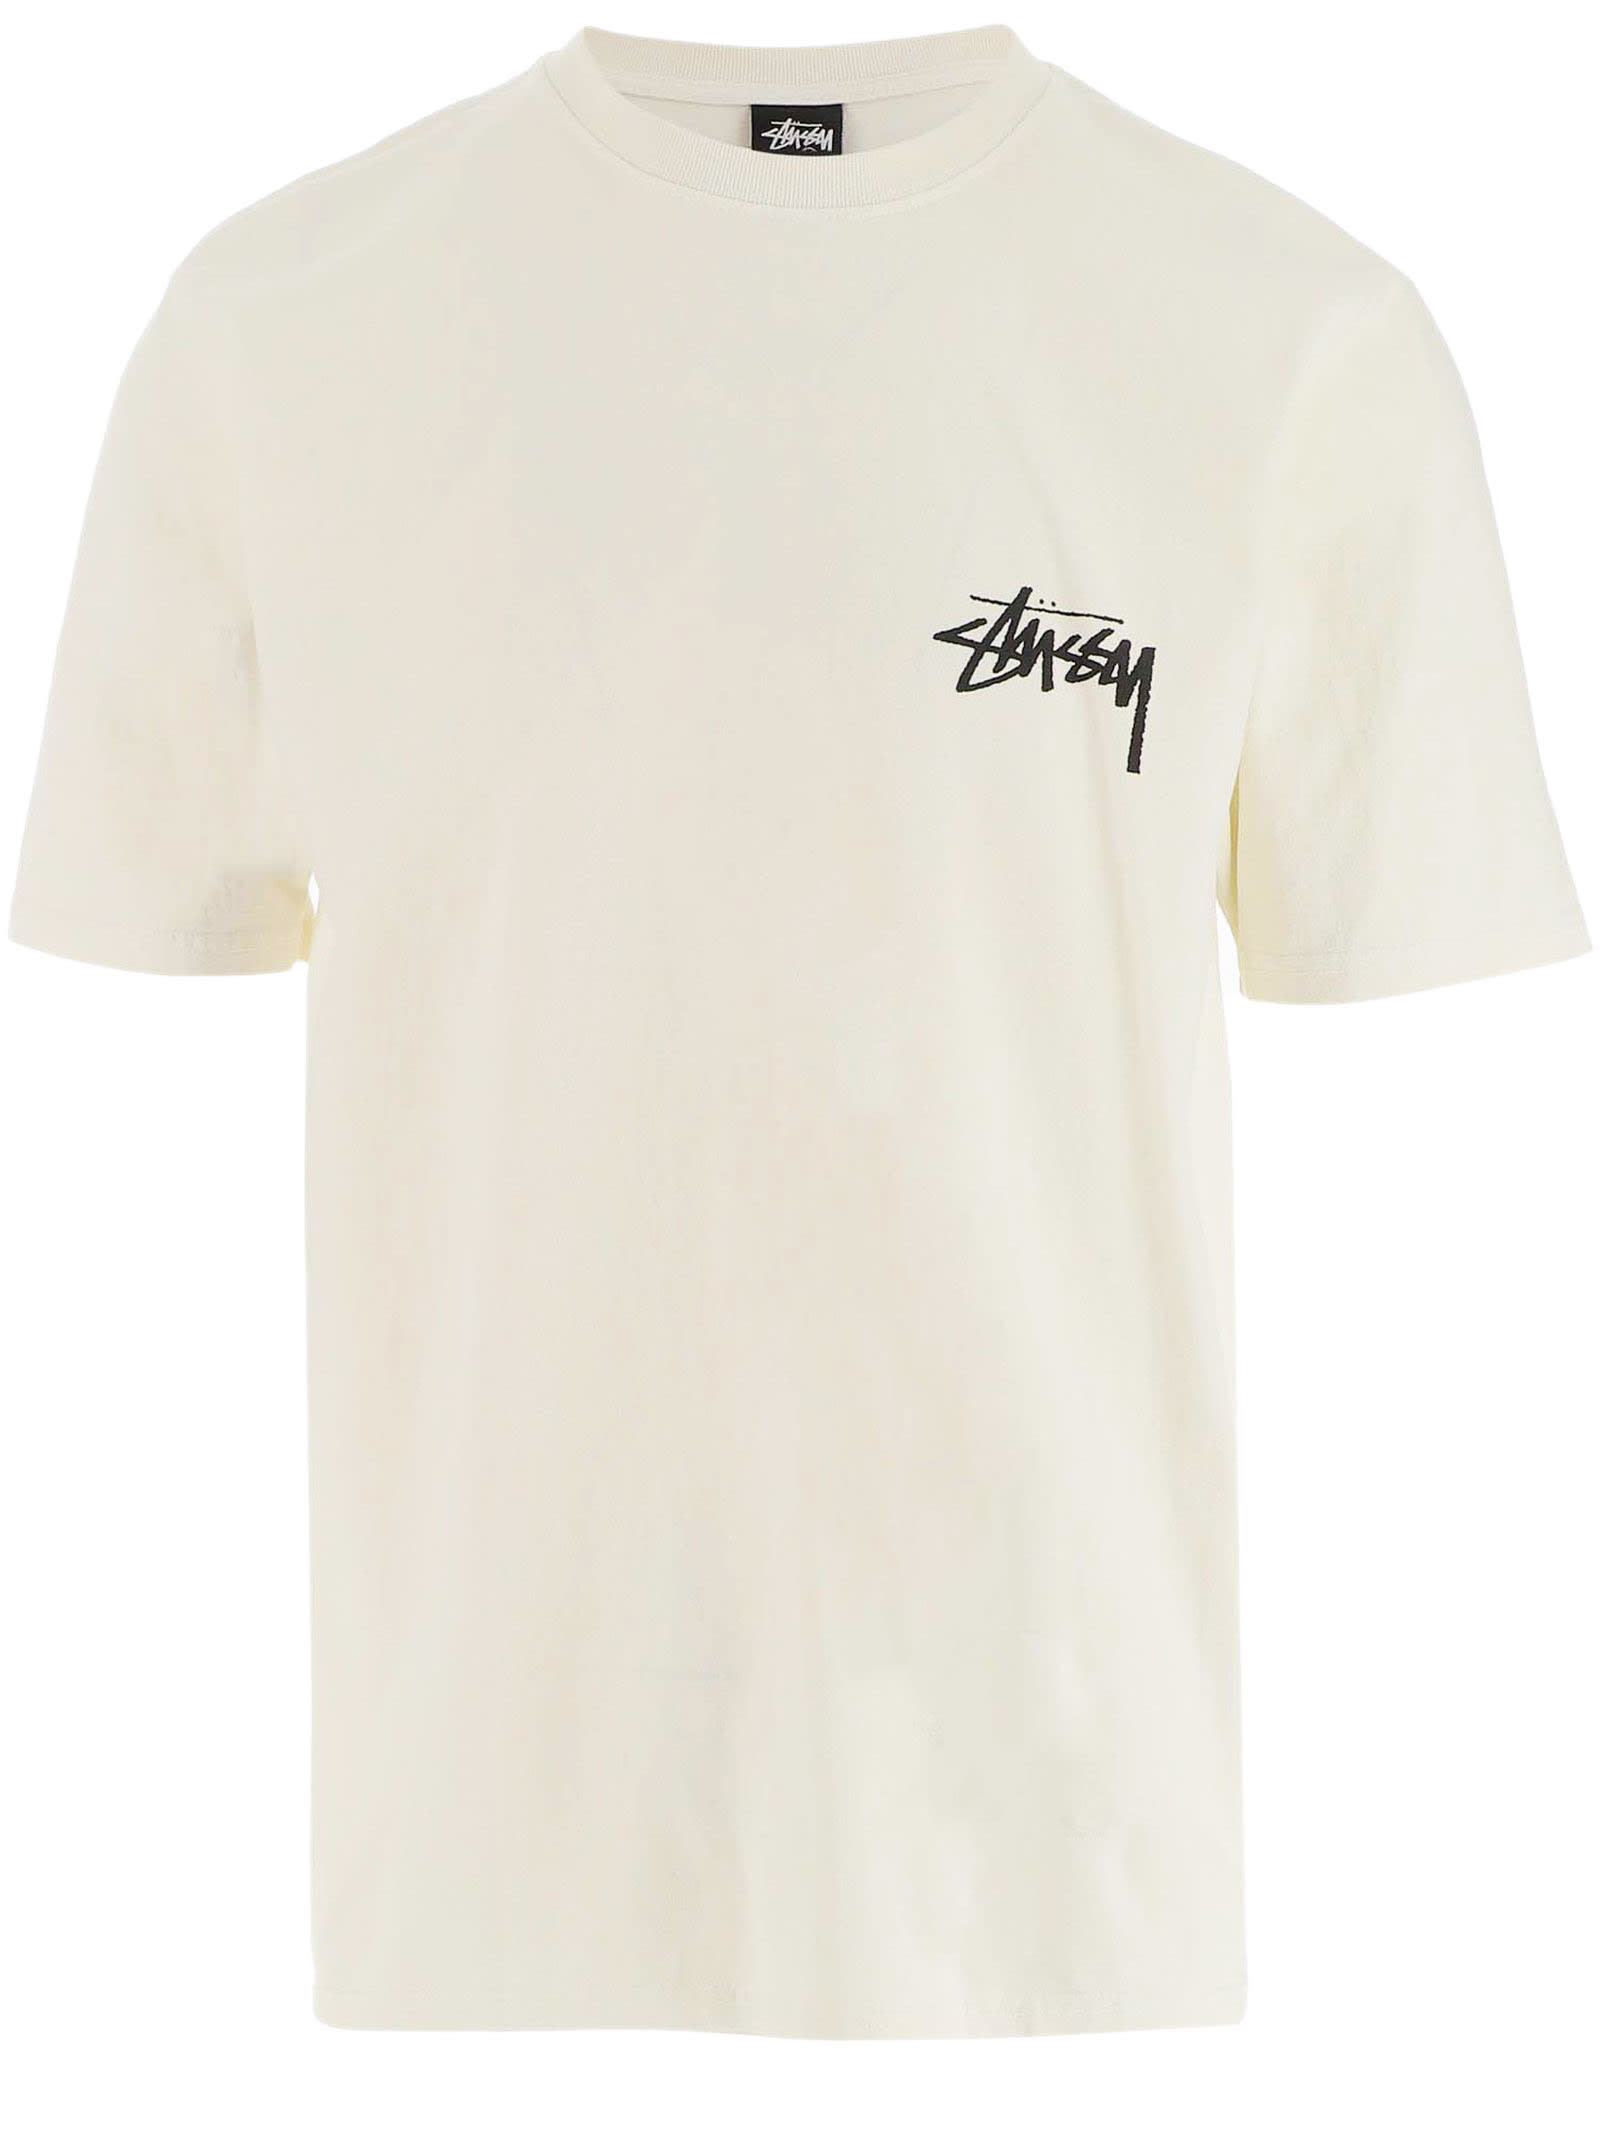 Stussy White Cotton T-shirt